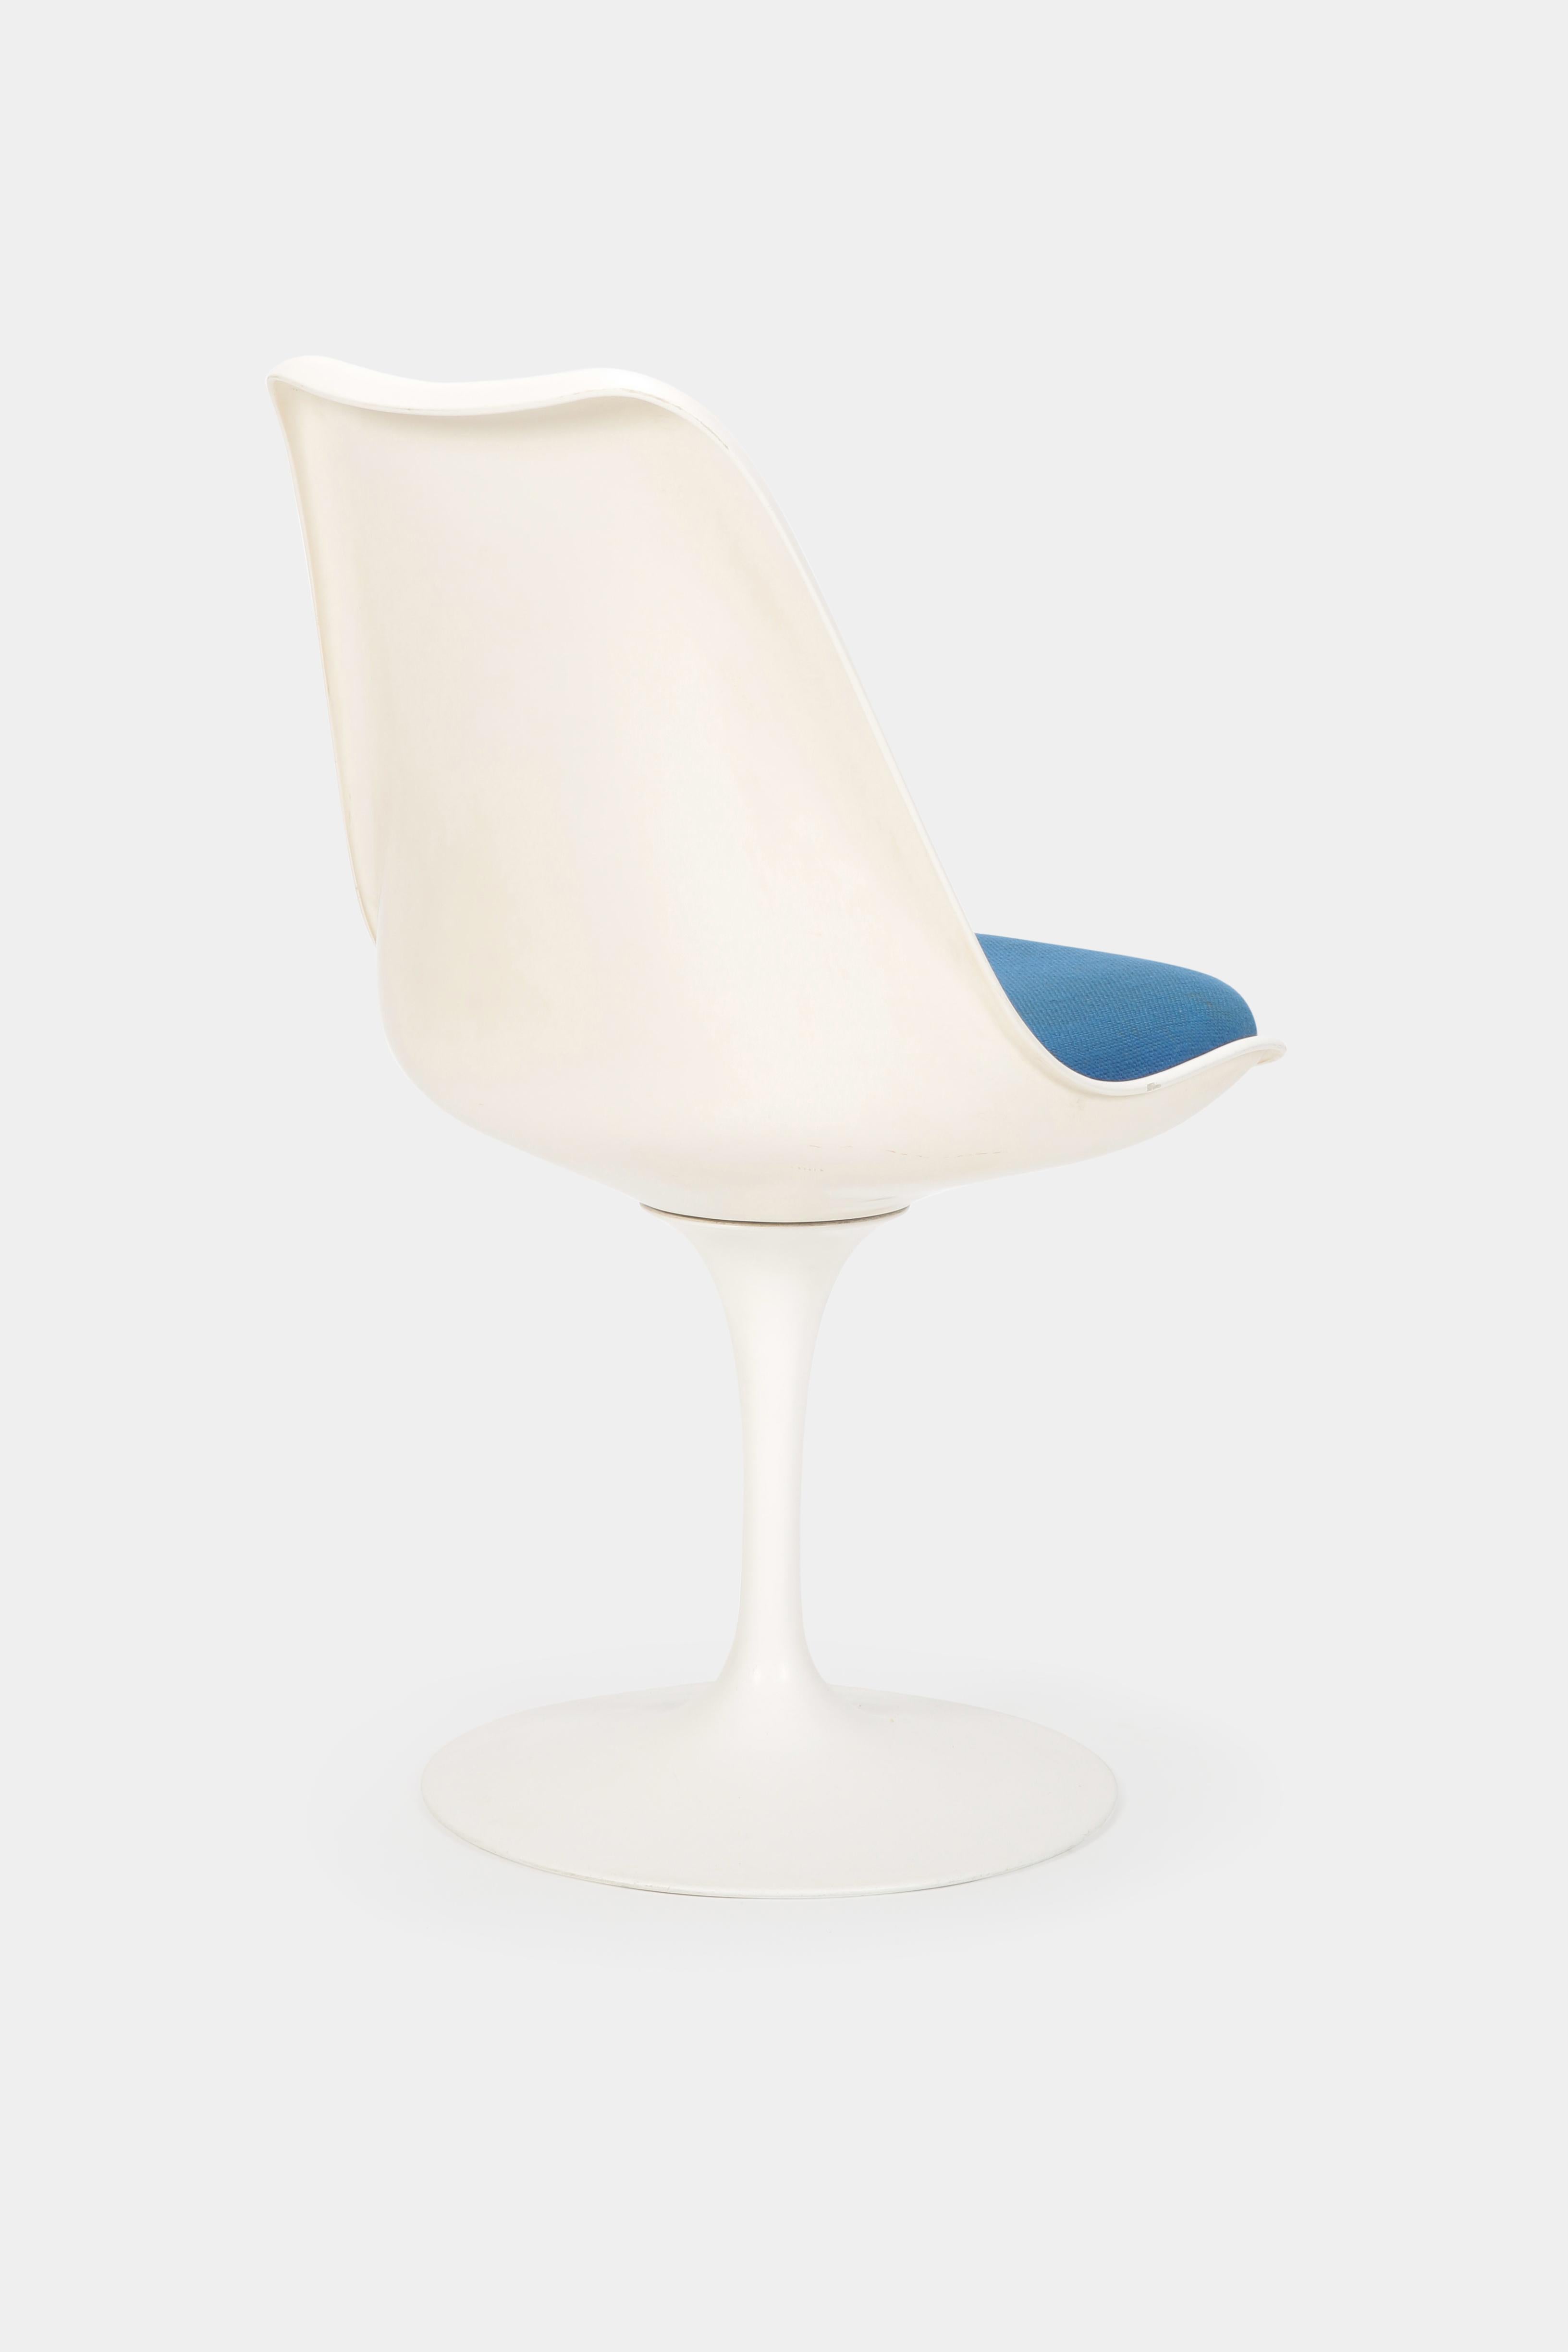 Danish Eero Saarinen “Tulip” Chair Knoll International, 1960s